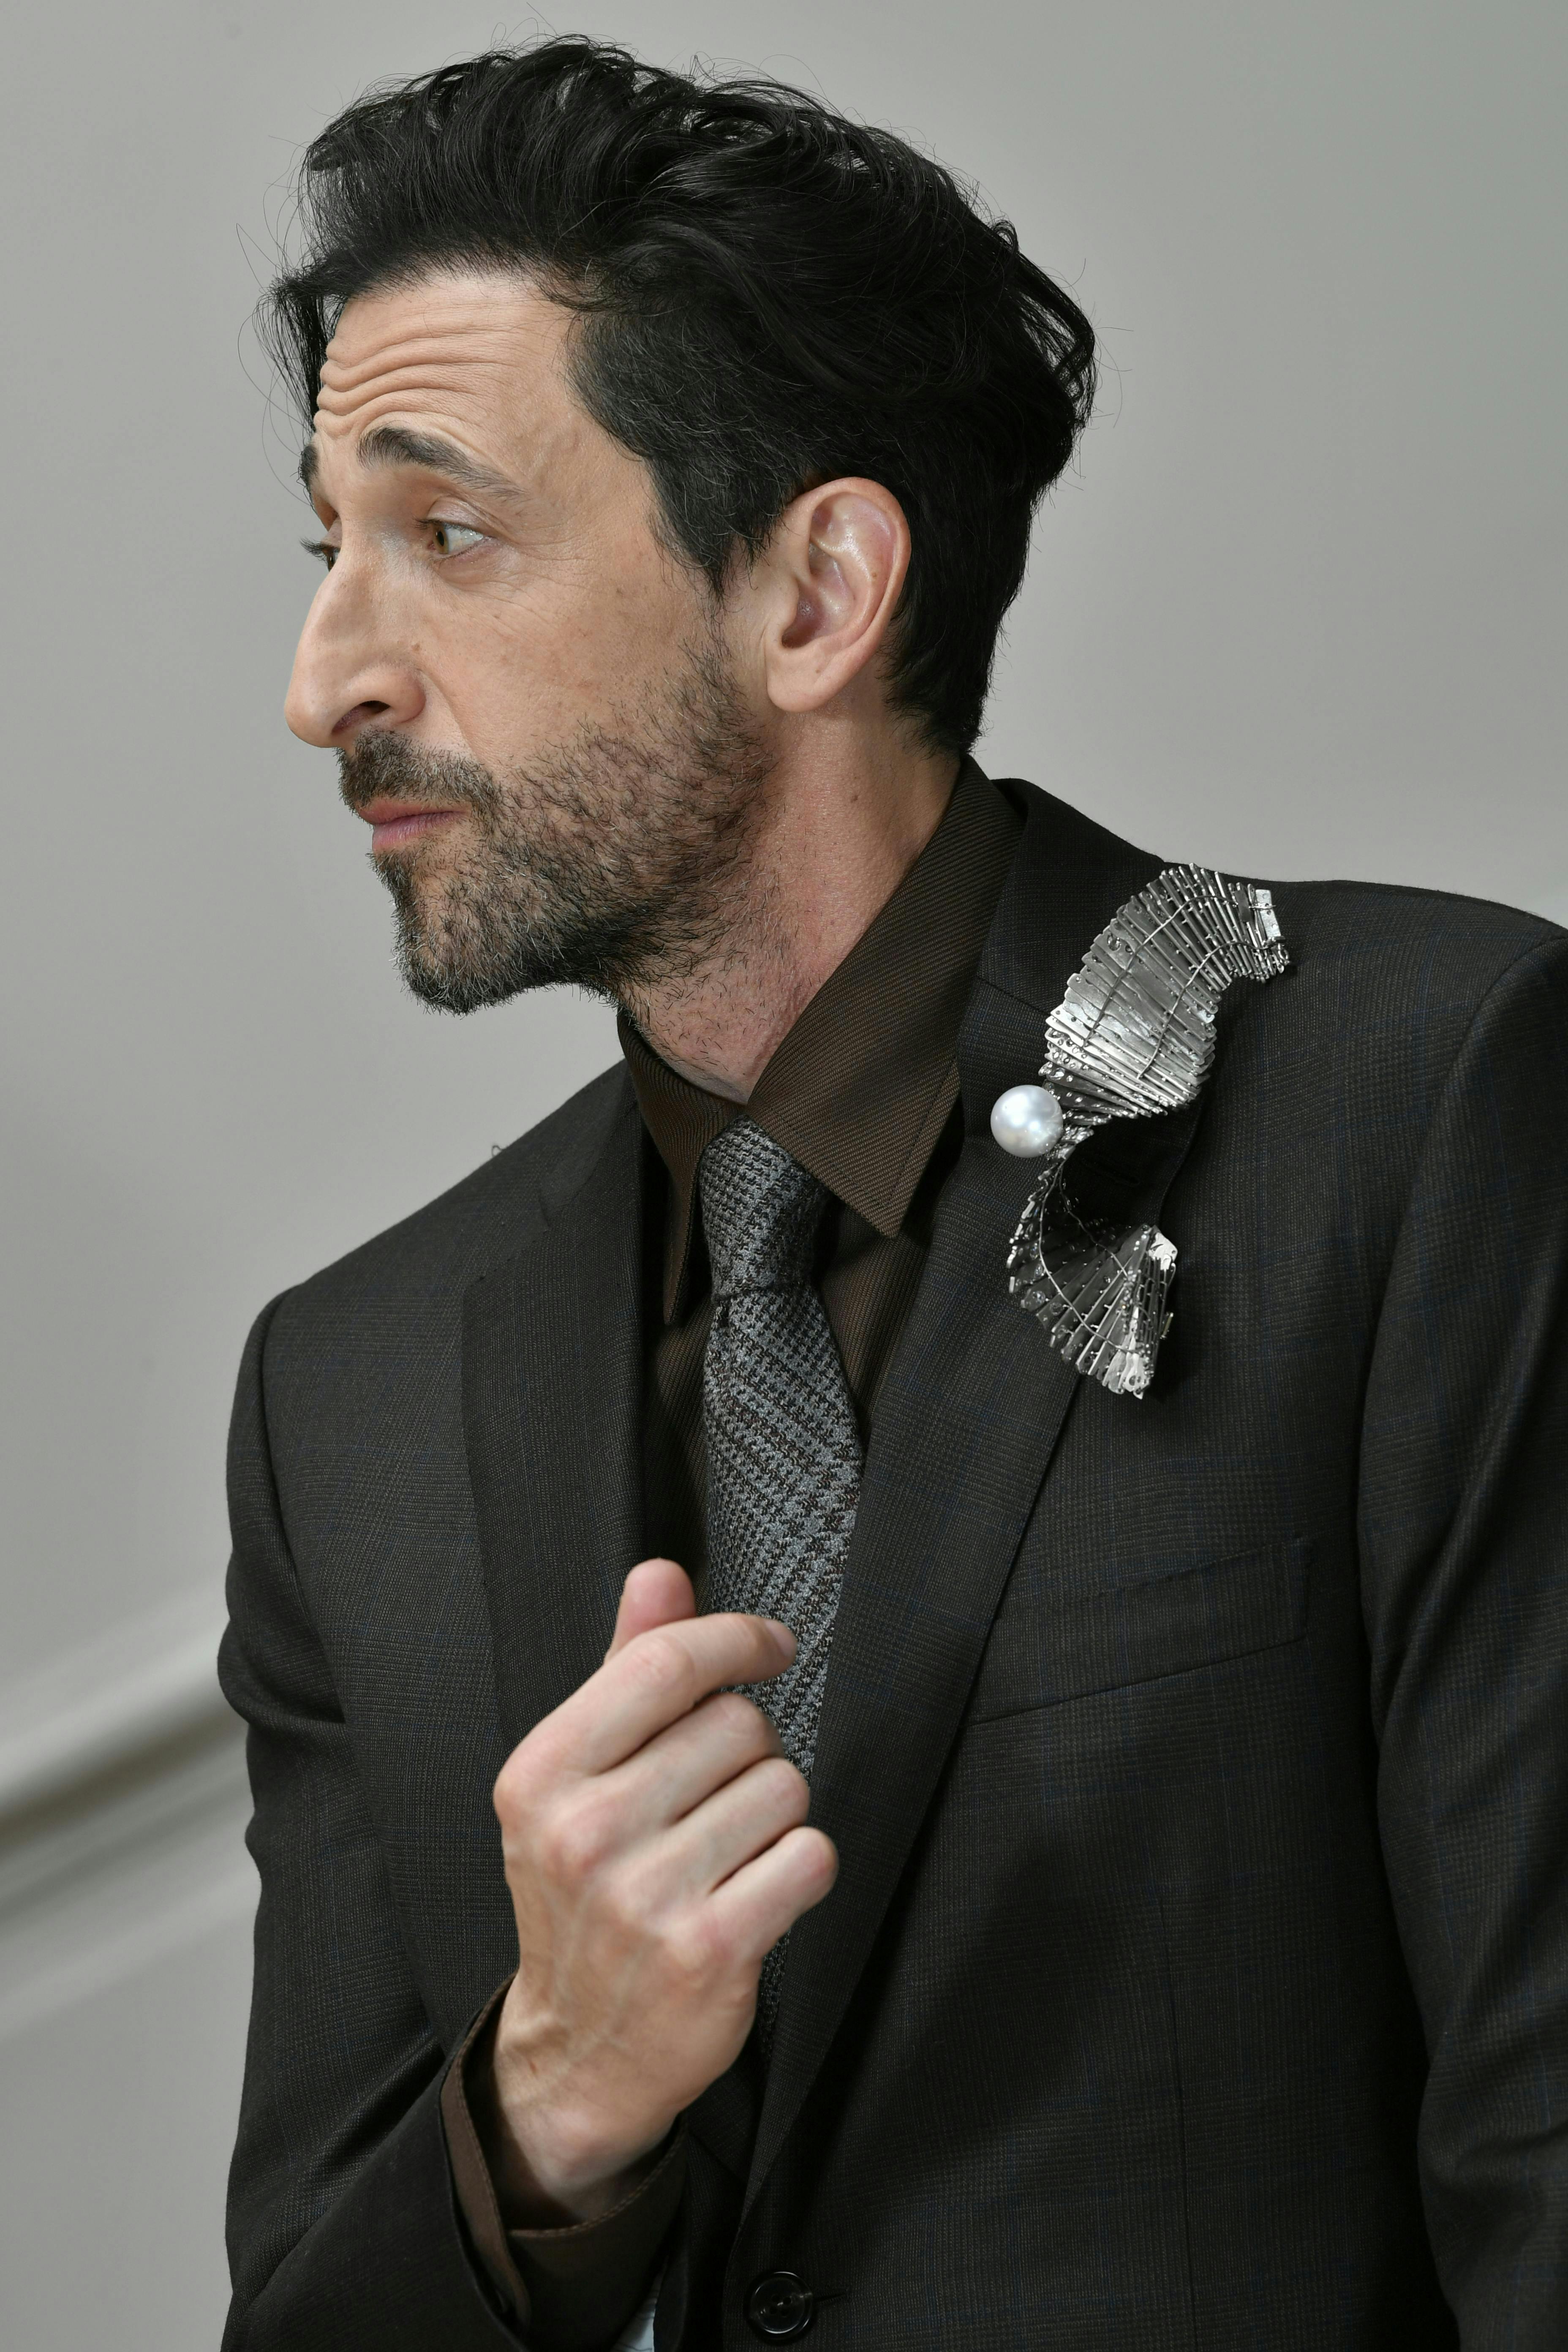 accessories formal wear tie finger person suit necktie adult male man